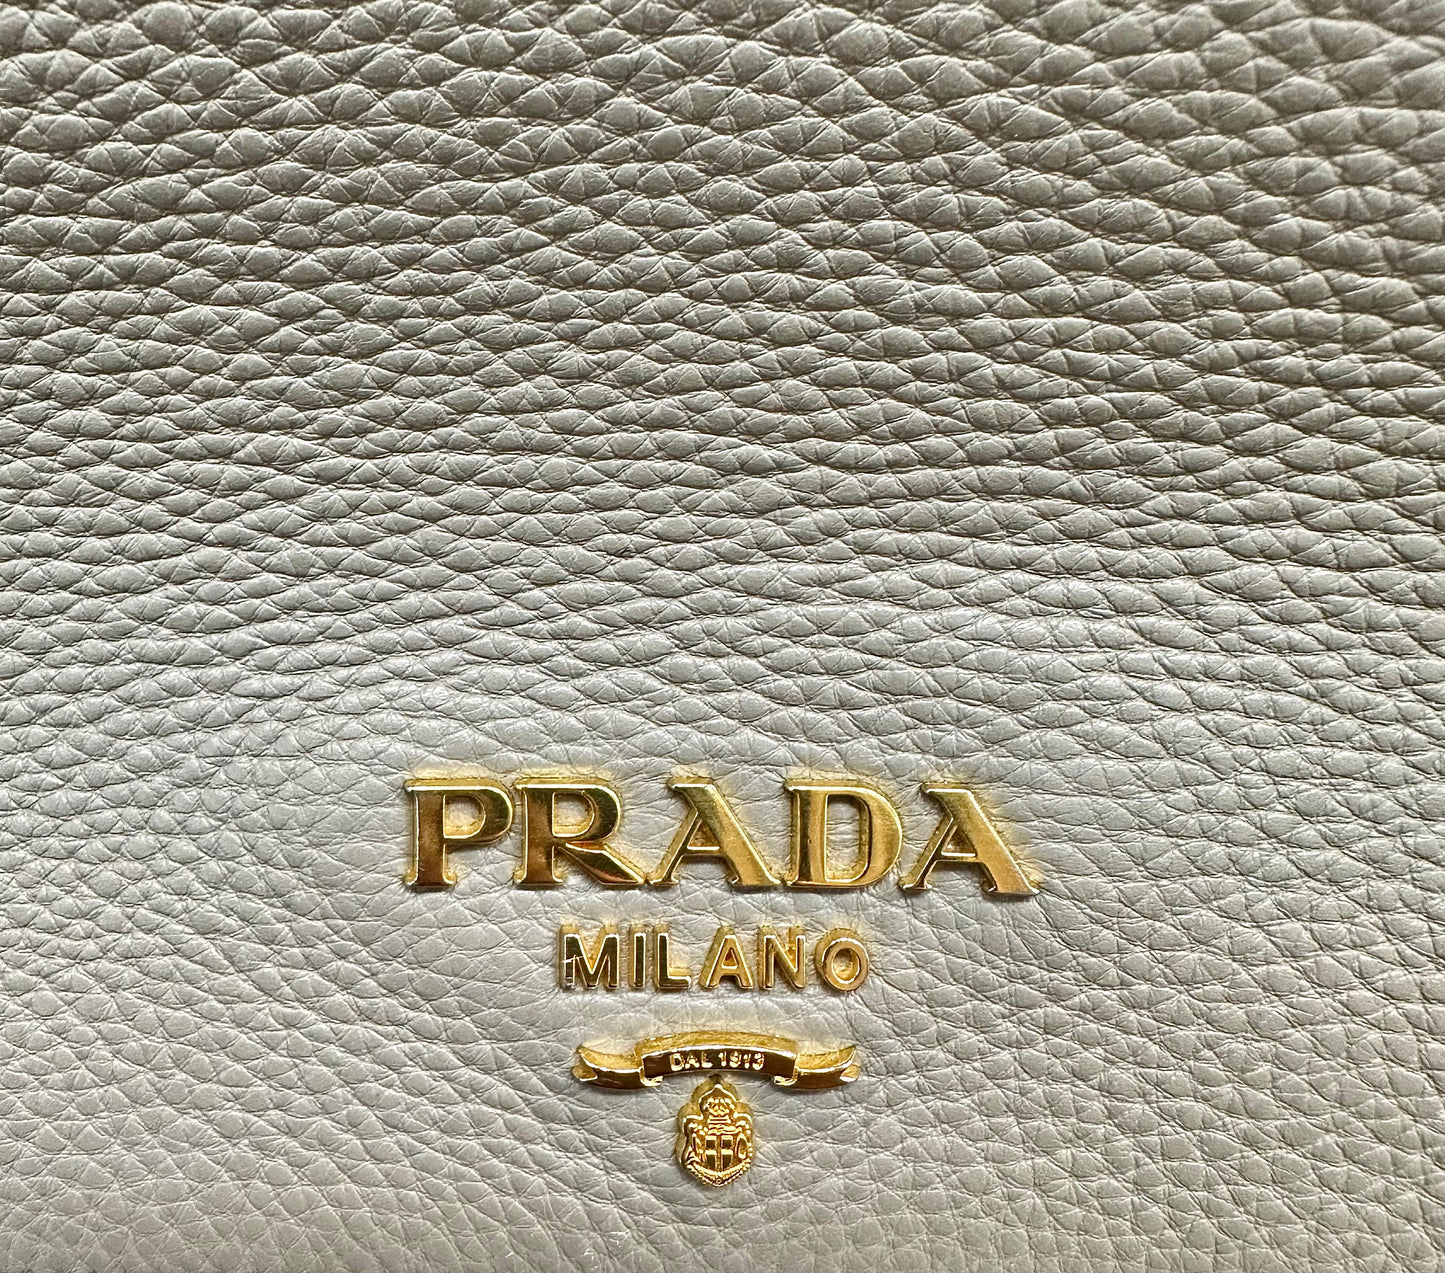 Close up of gold Prada logo on front of bag